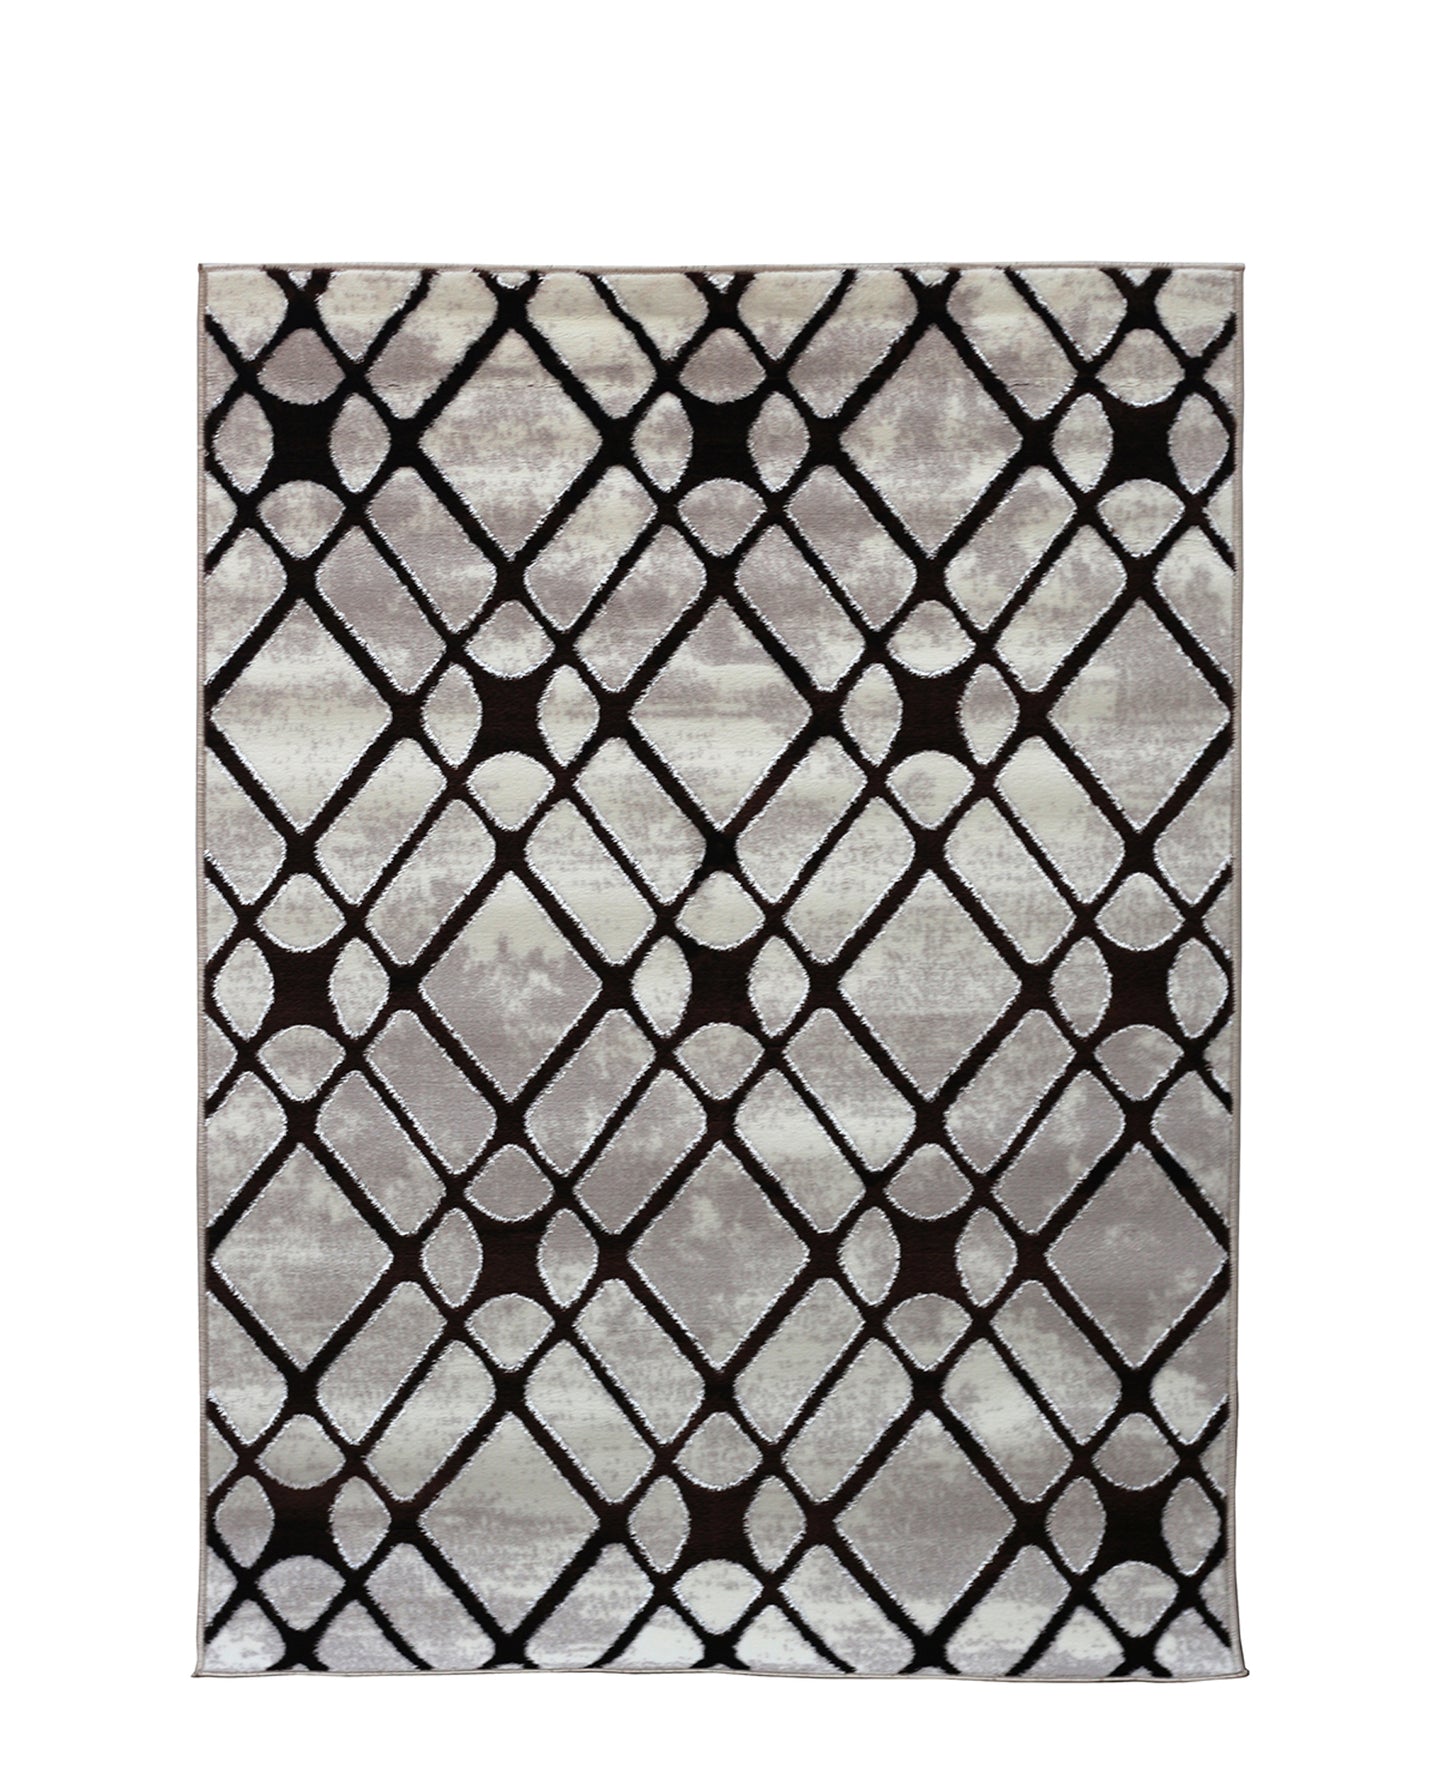 Konya Carpet 1200mm X 1700mm